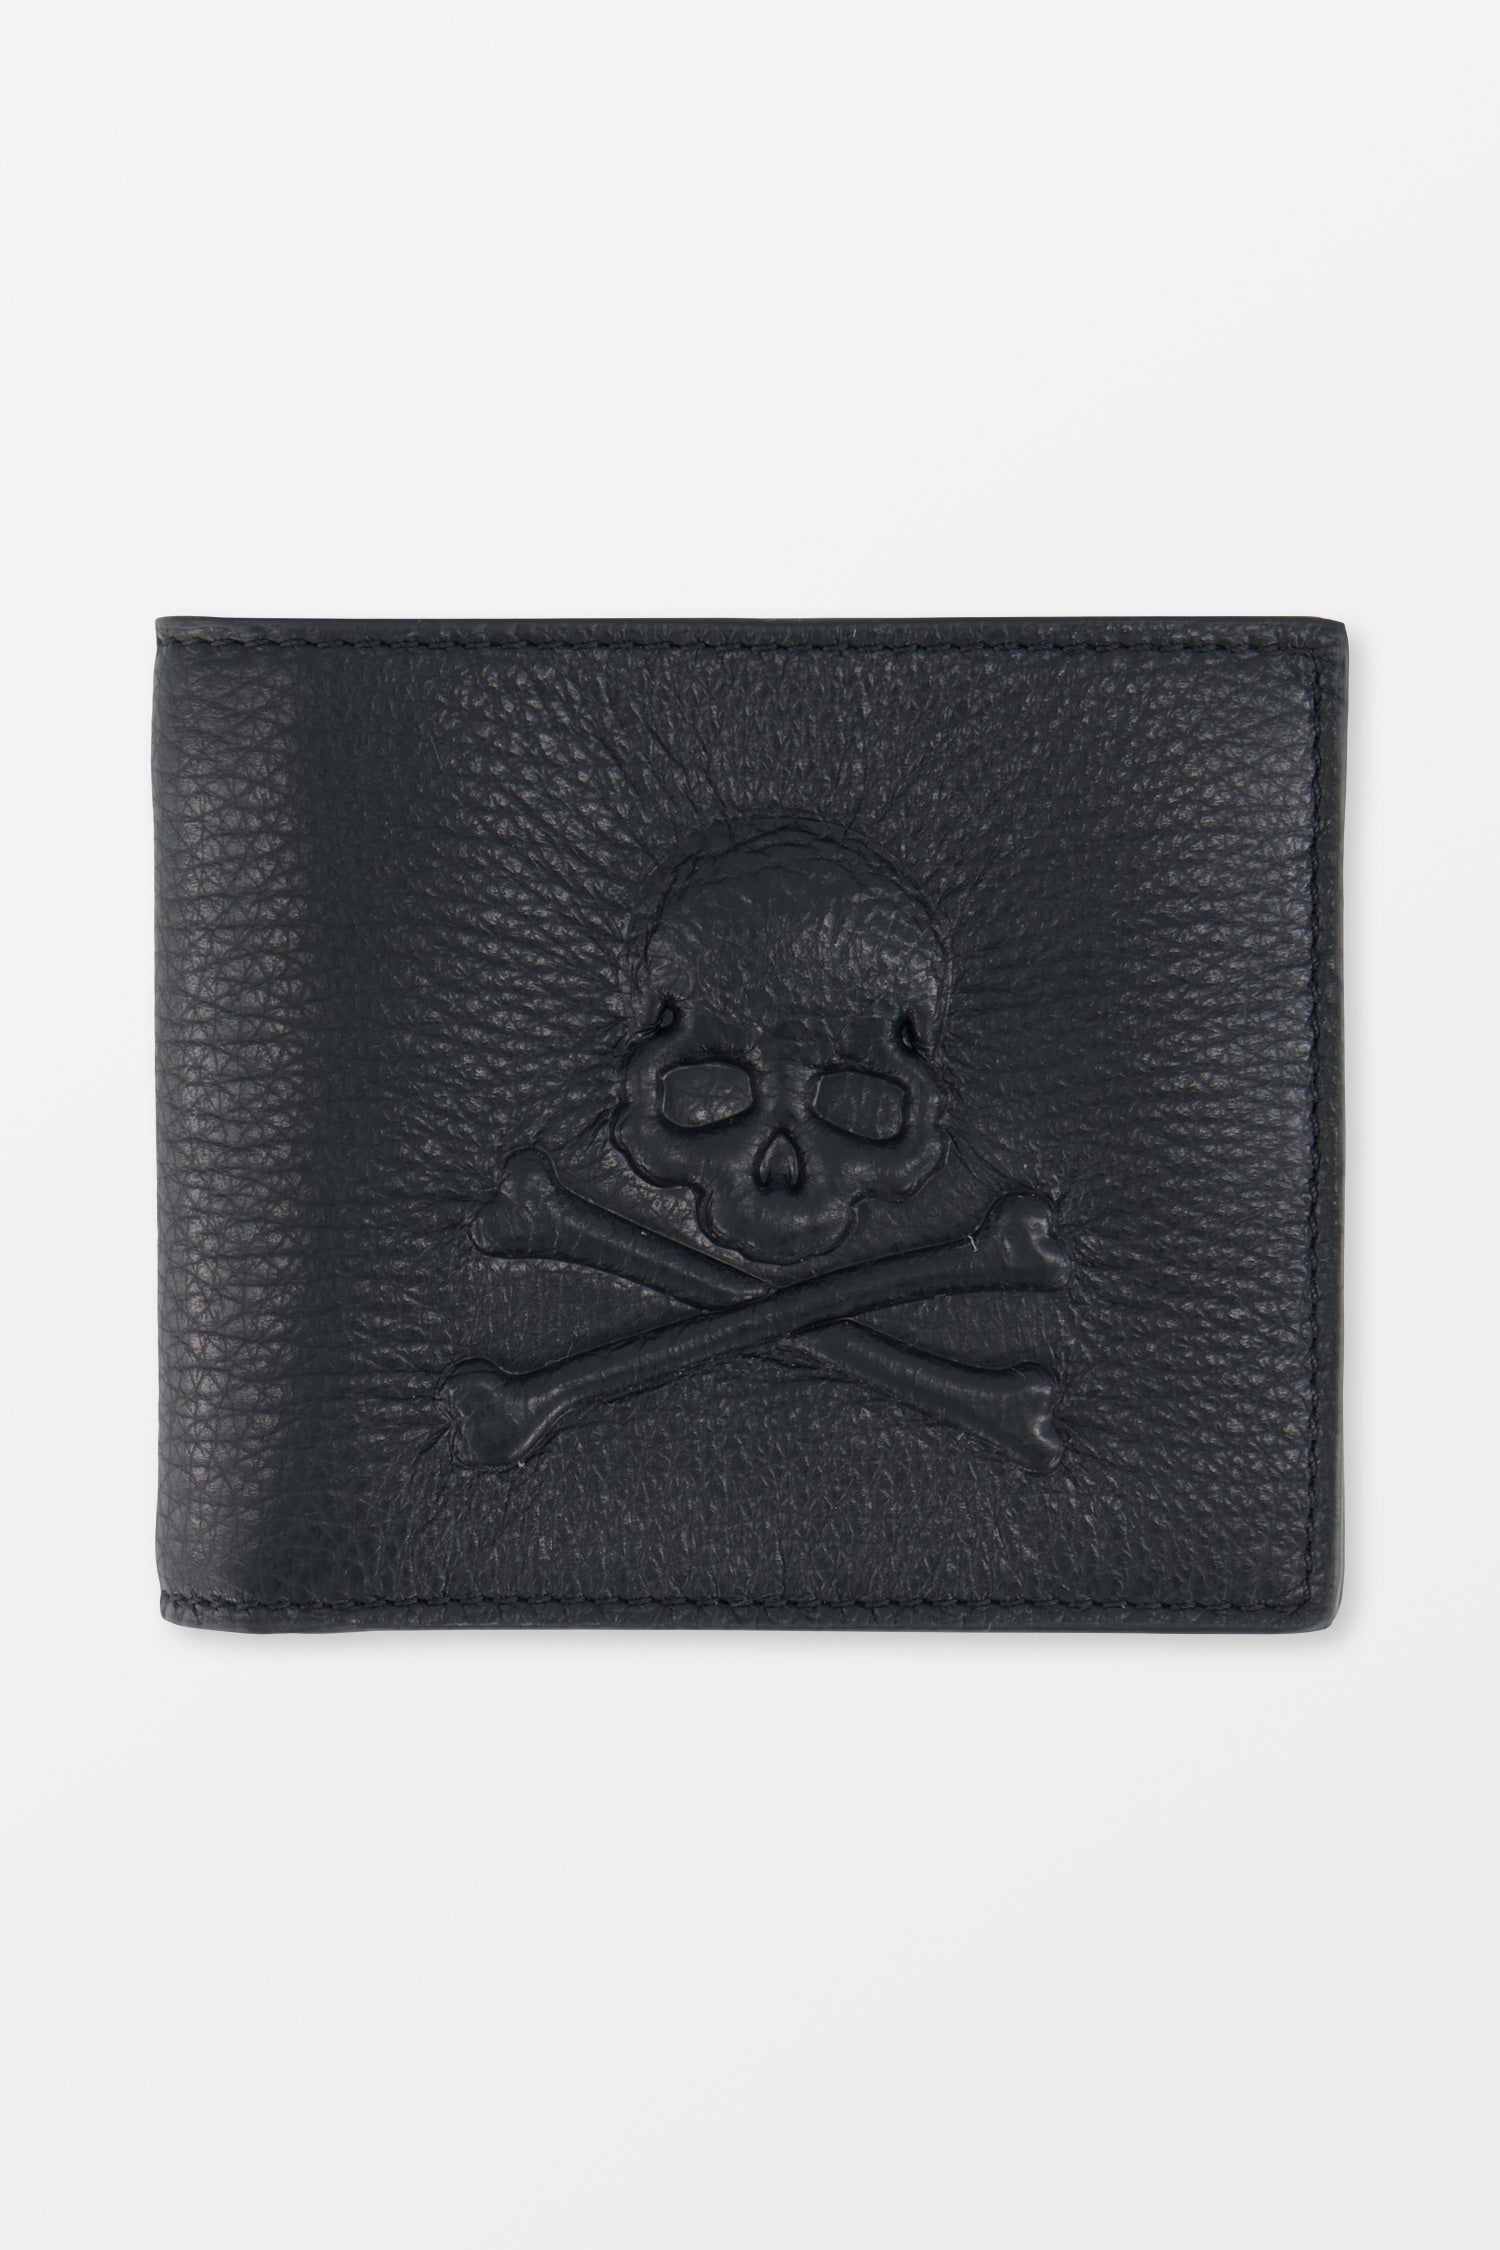 Williampolo Top Brand Men Wallets Genuine Leather Slim Bifold Credit Card  Holder Male Pocket Purse Male Clutch Mini Wallet Money | Fruugo KR